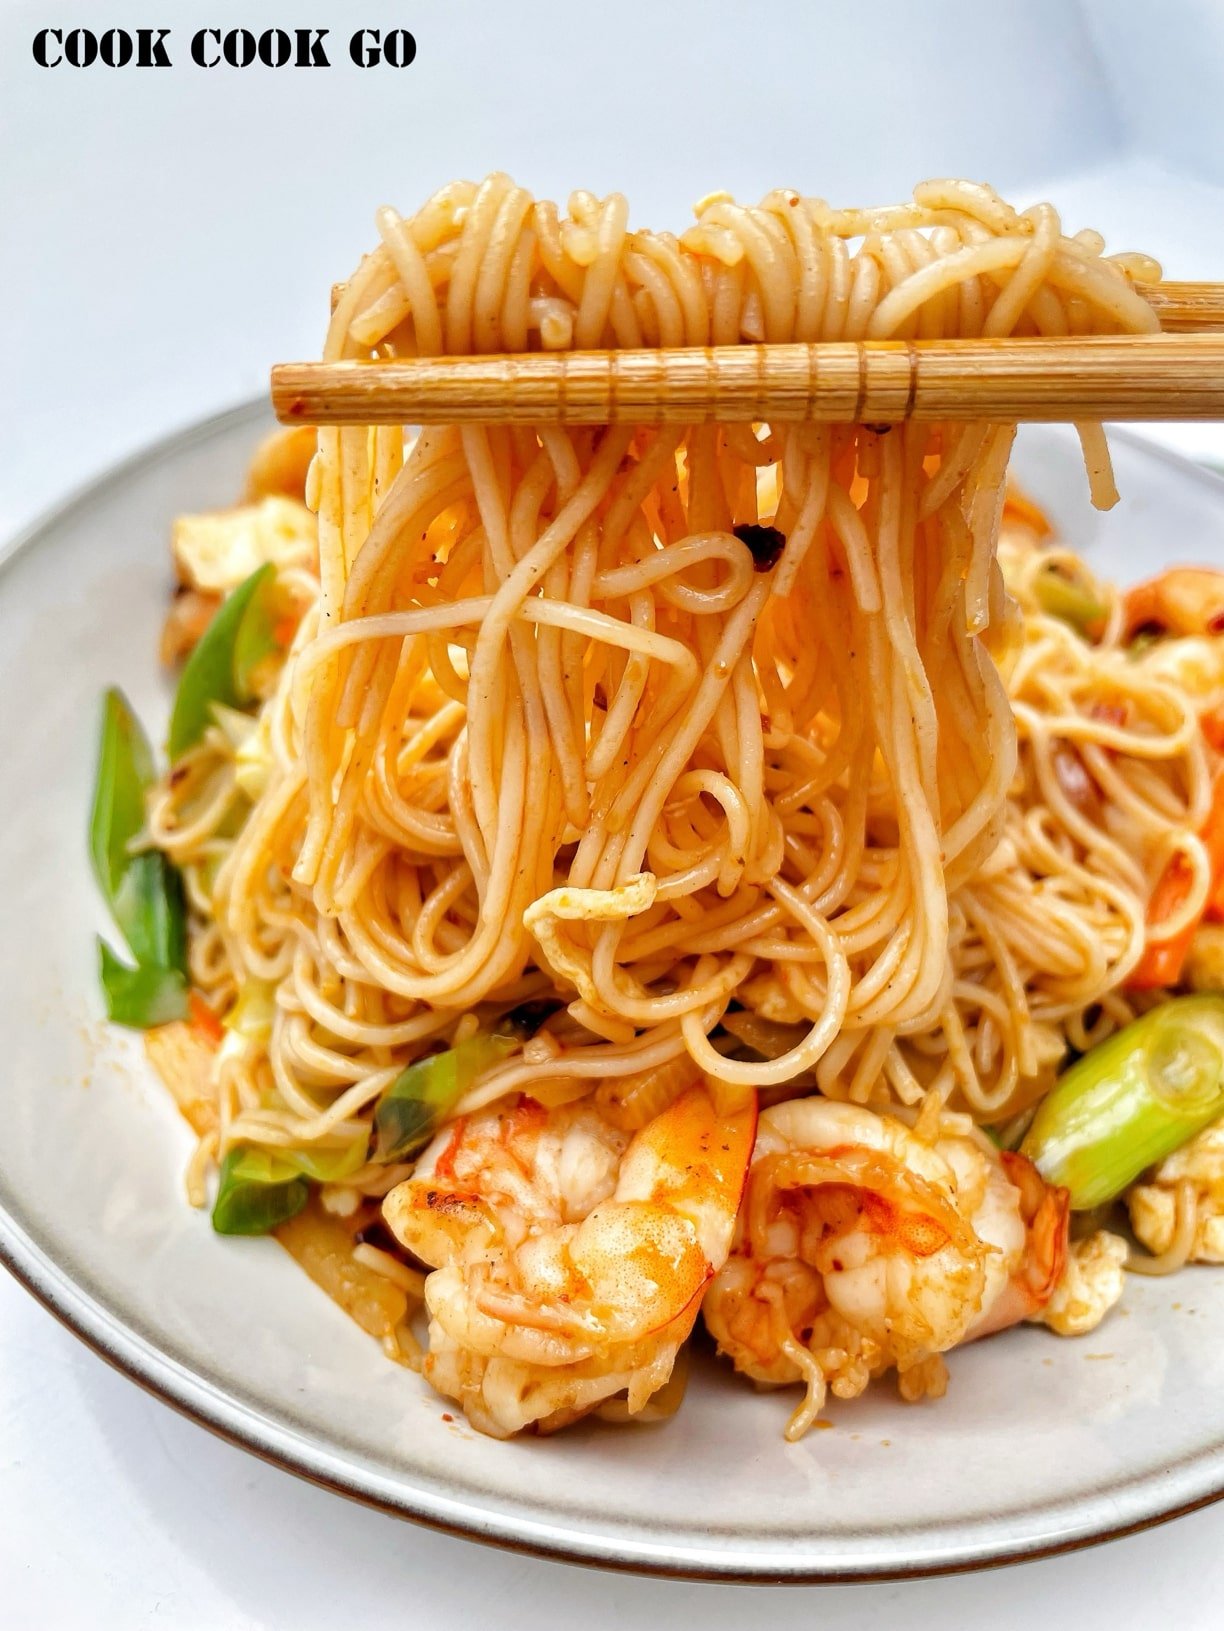 stir fry rice noodles with shrimp